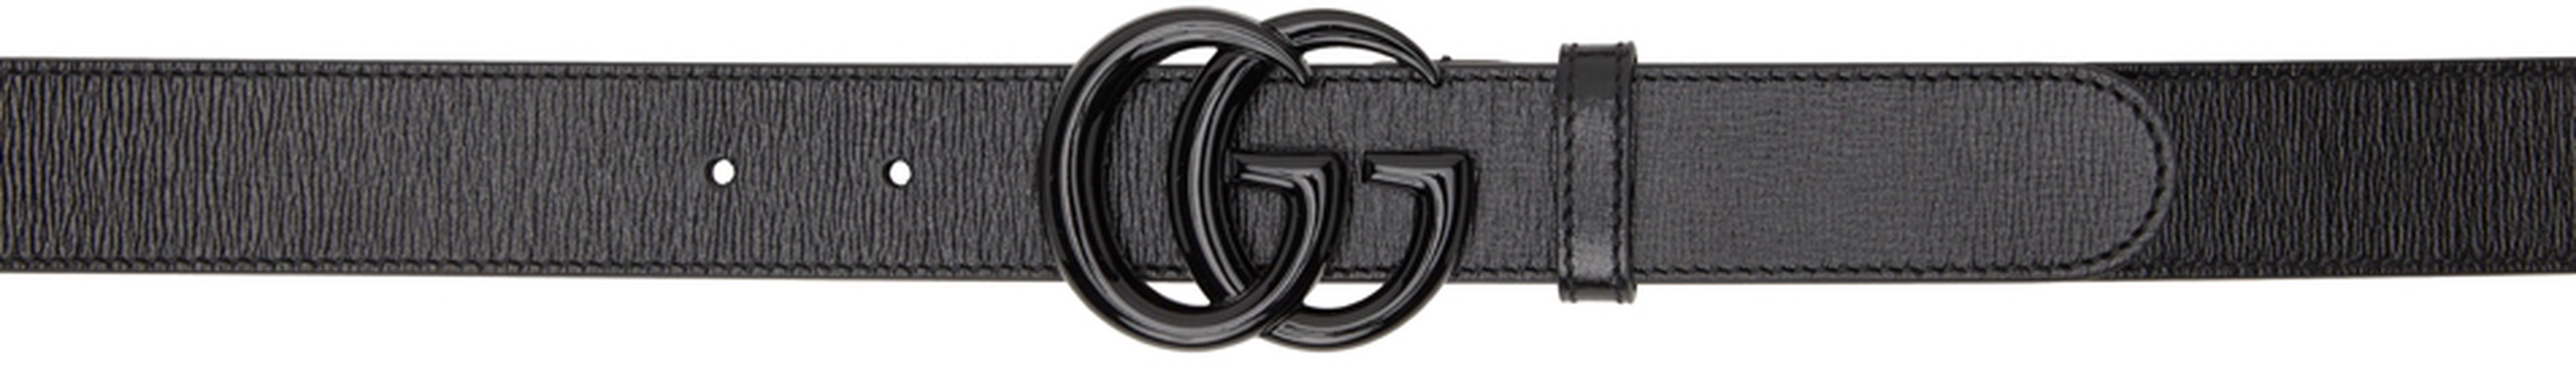 Gucci Black GG Marmont Thin Belt